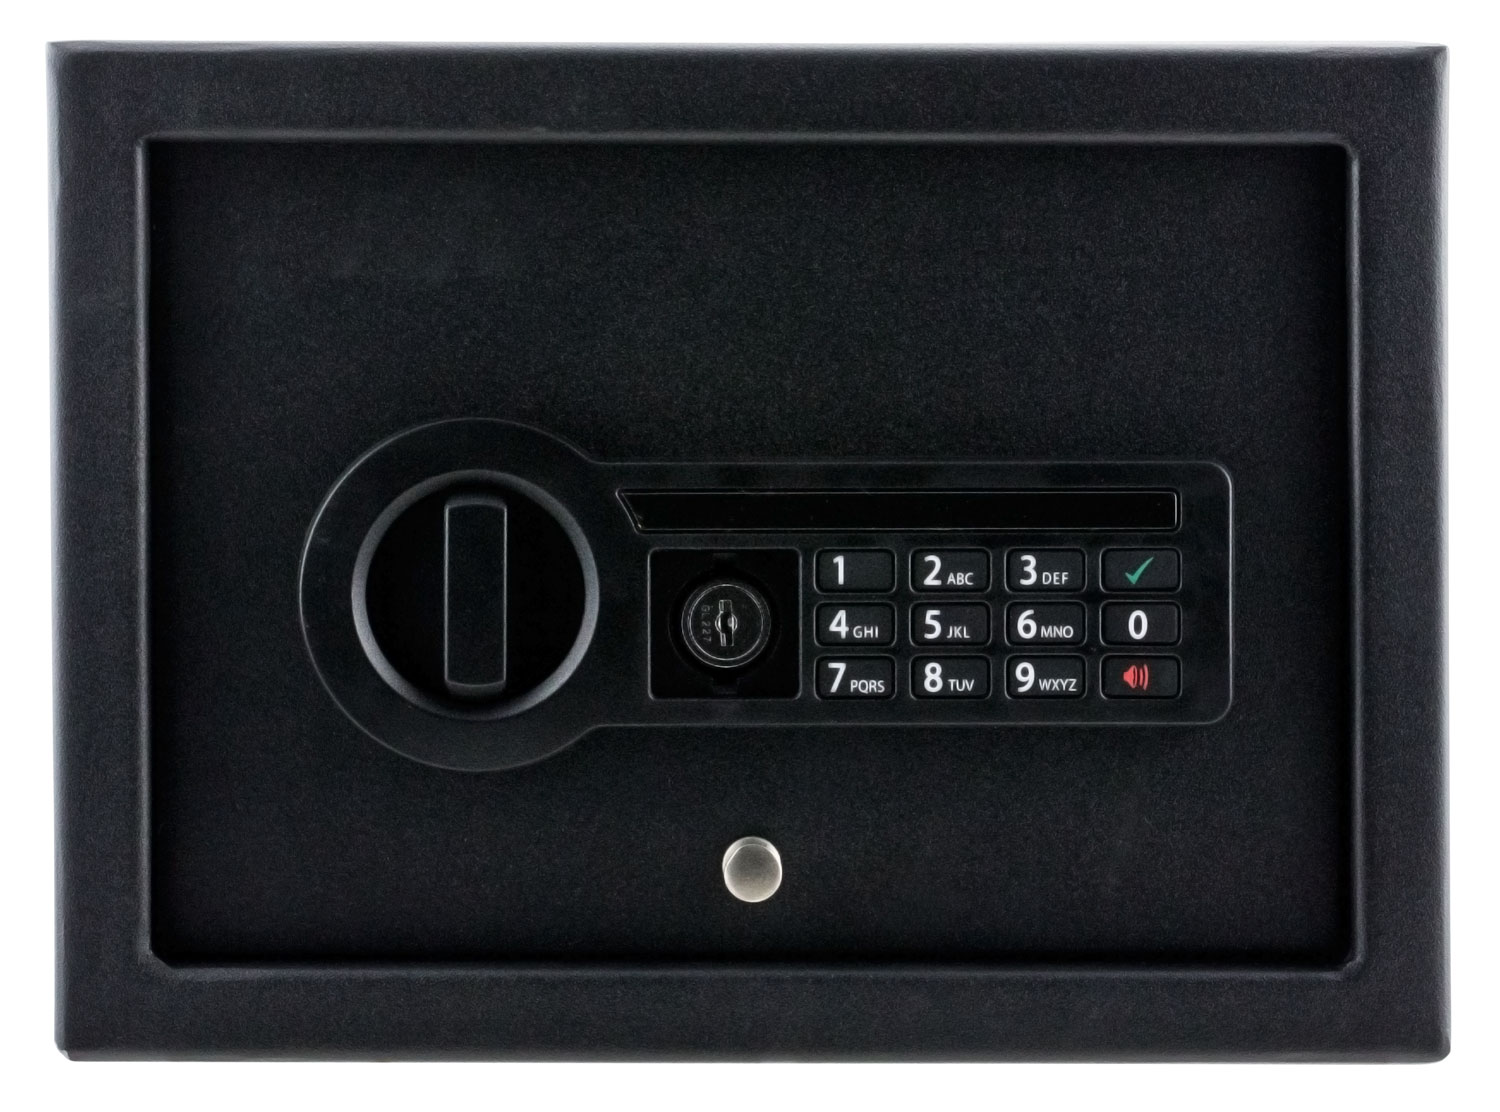 Stack-On PDS1800E Quick Access Safe Keypad/Key Entry Black Steel Holds 2 Handguns